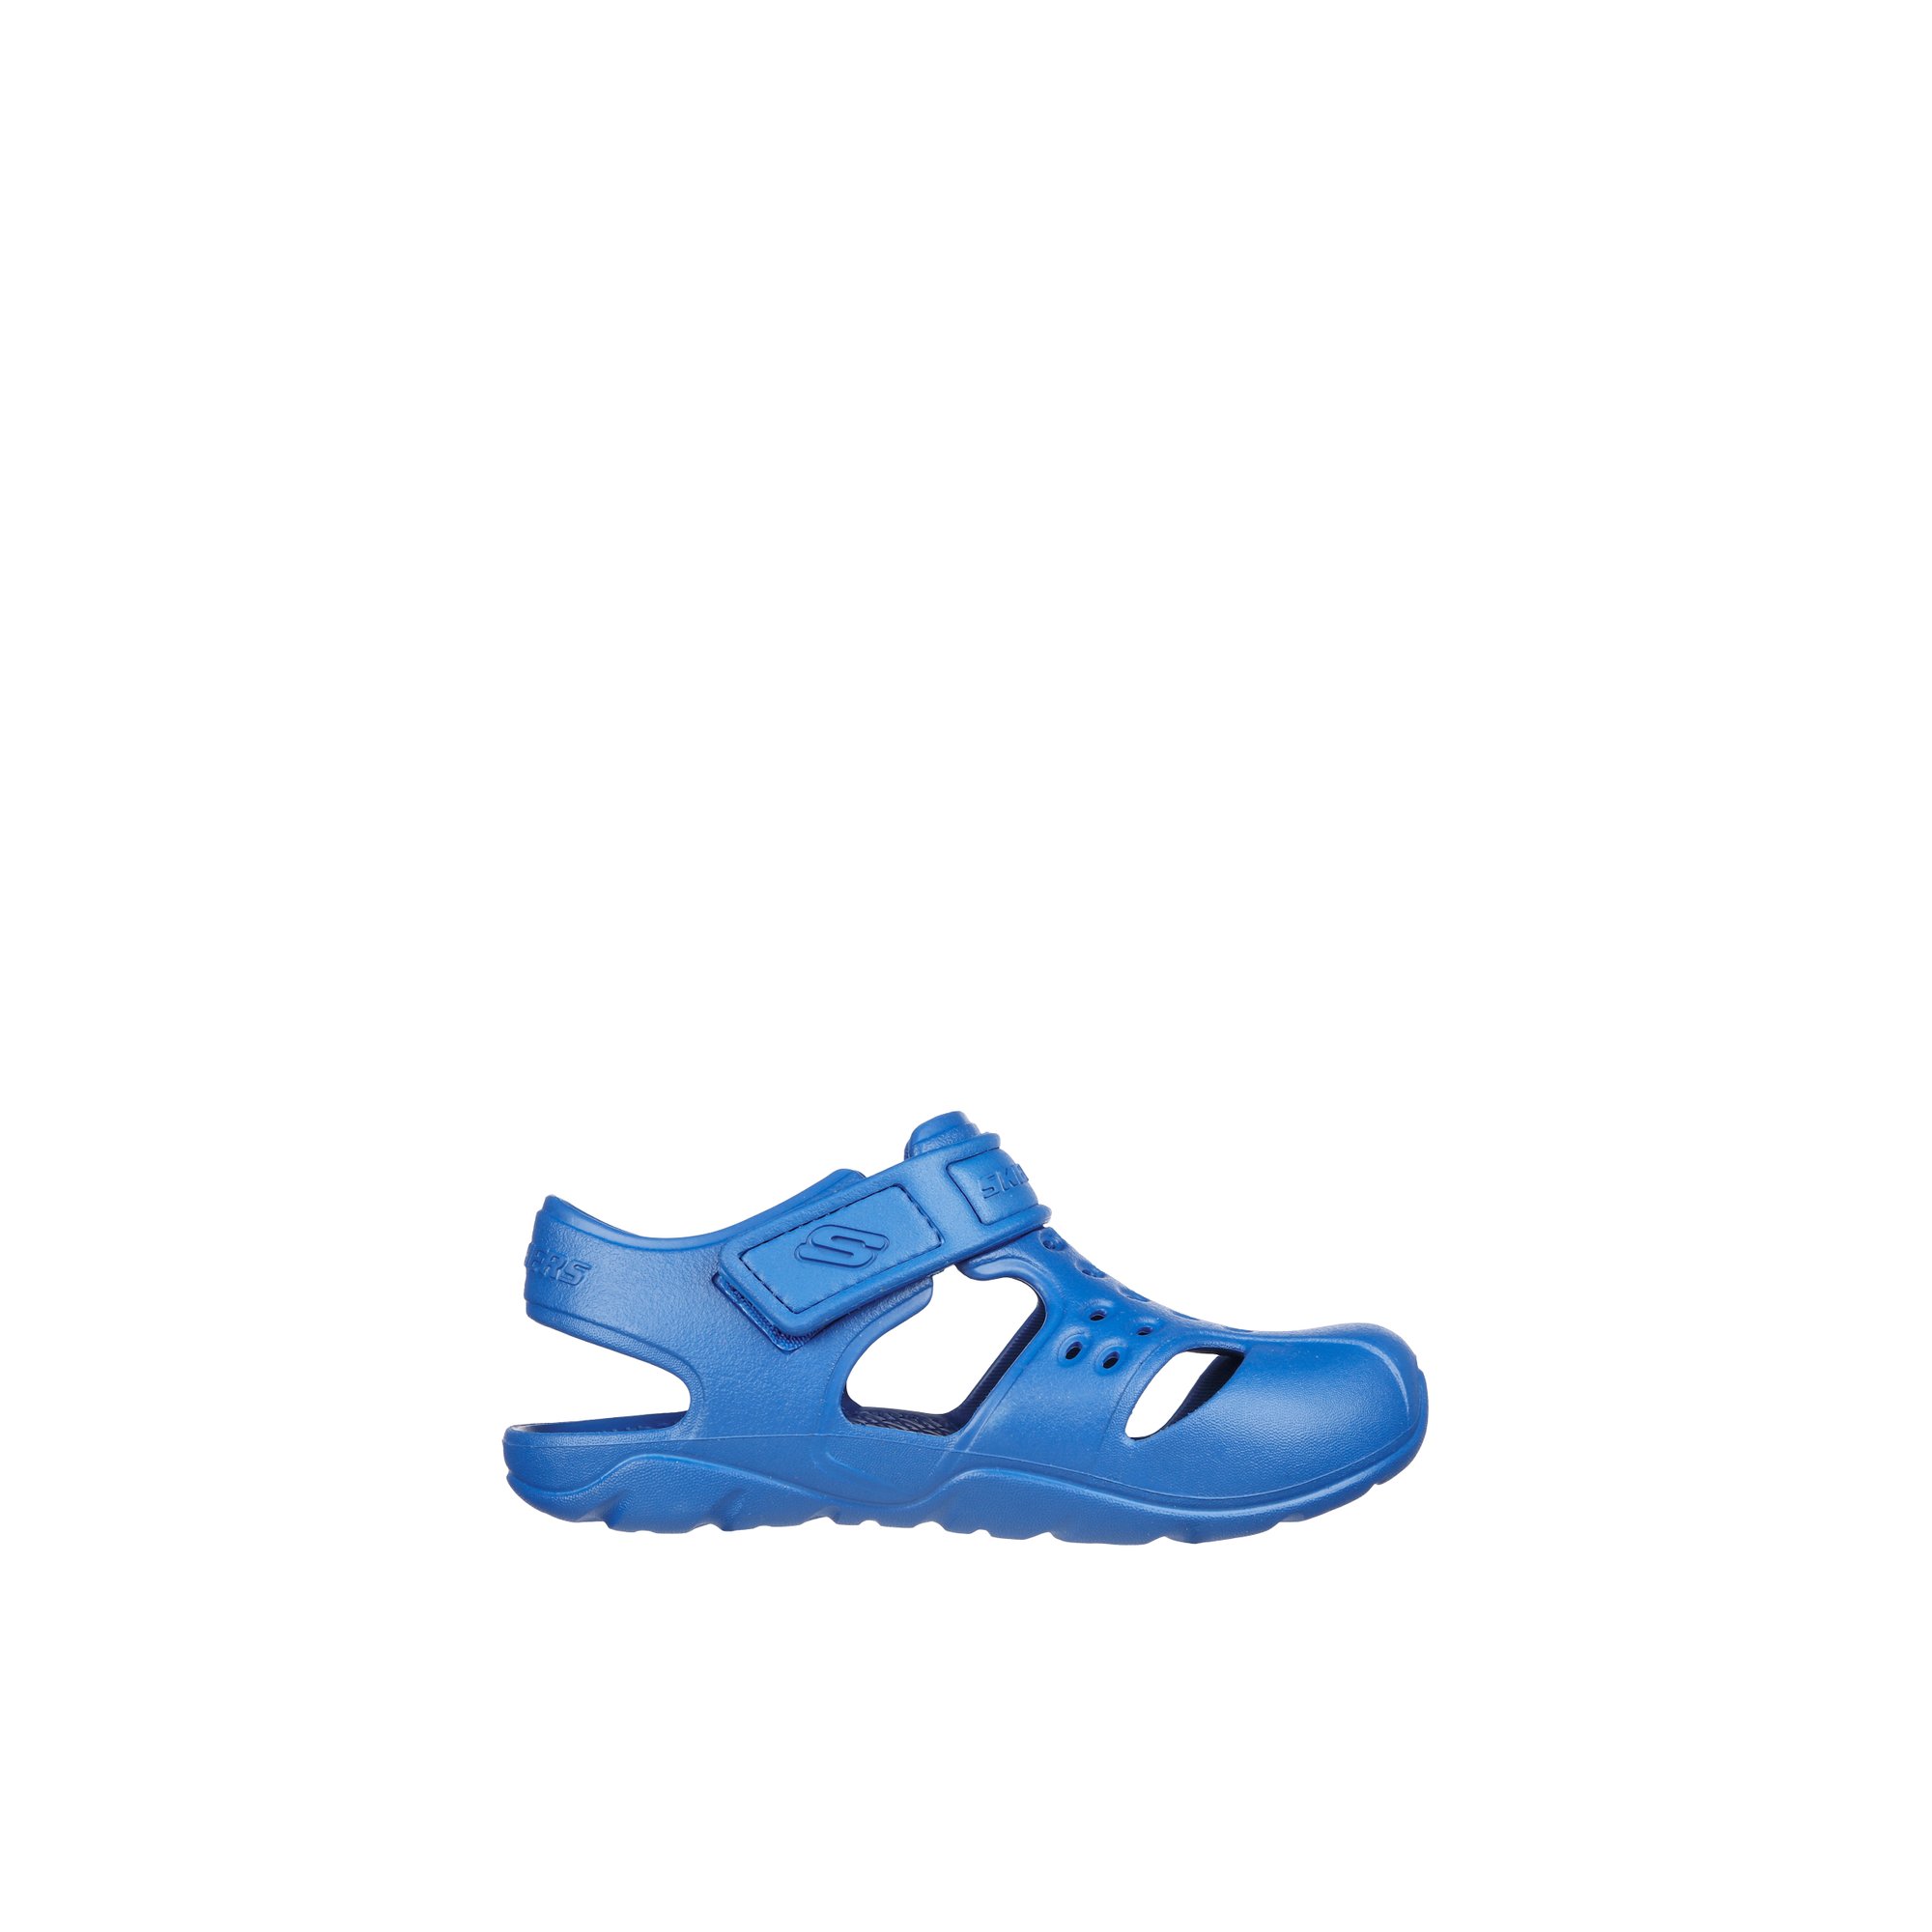 Skechers Waveblast-jb - Kids Boys Junior Sandals - Blue (Shoes) photo